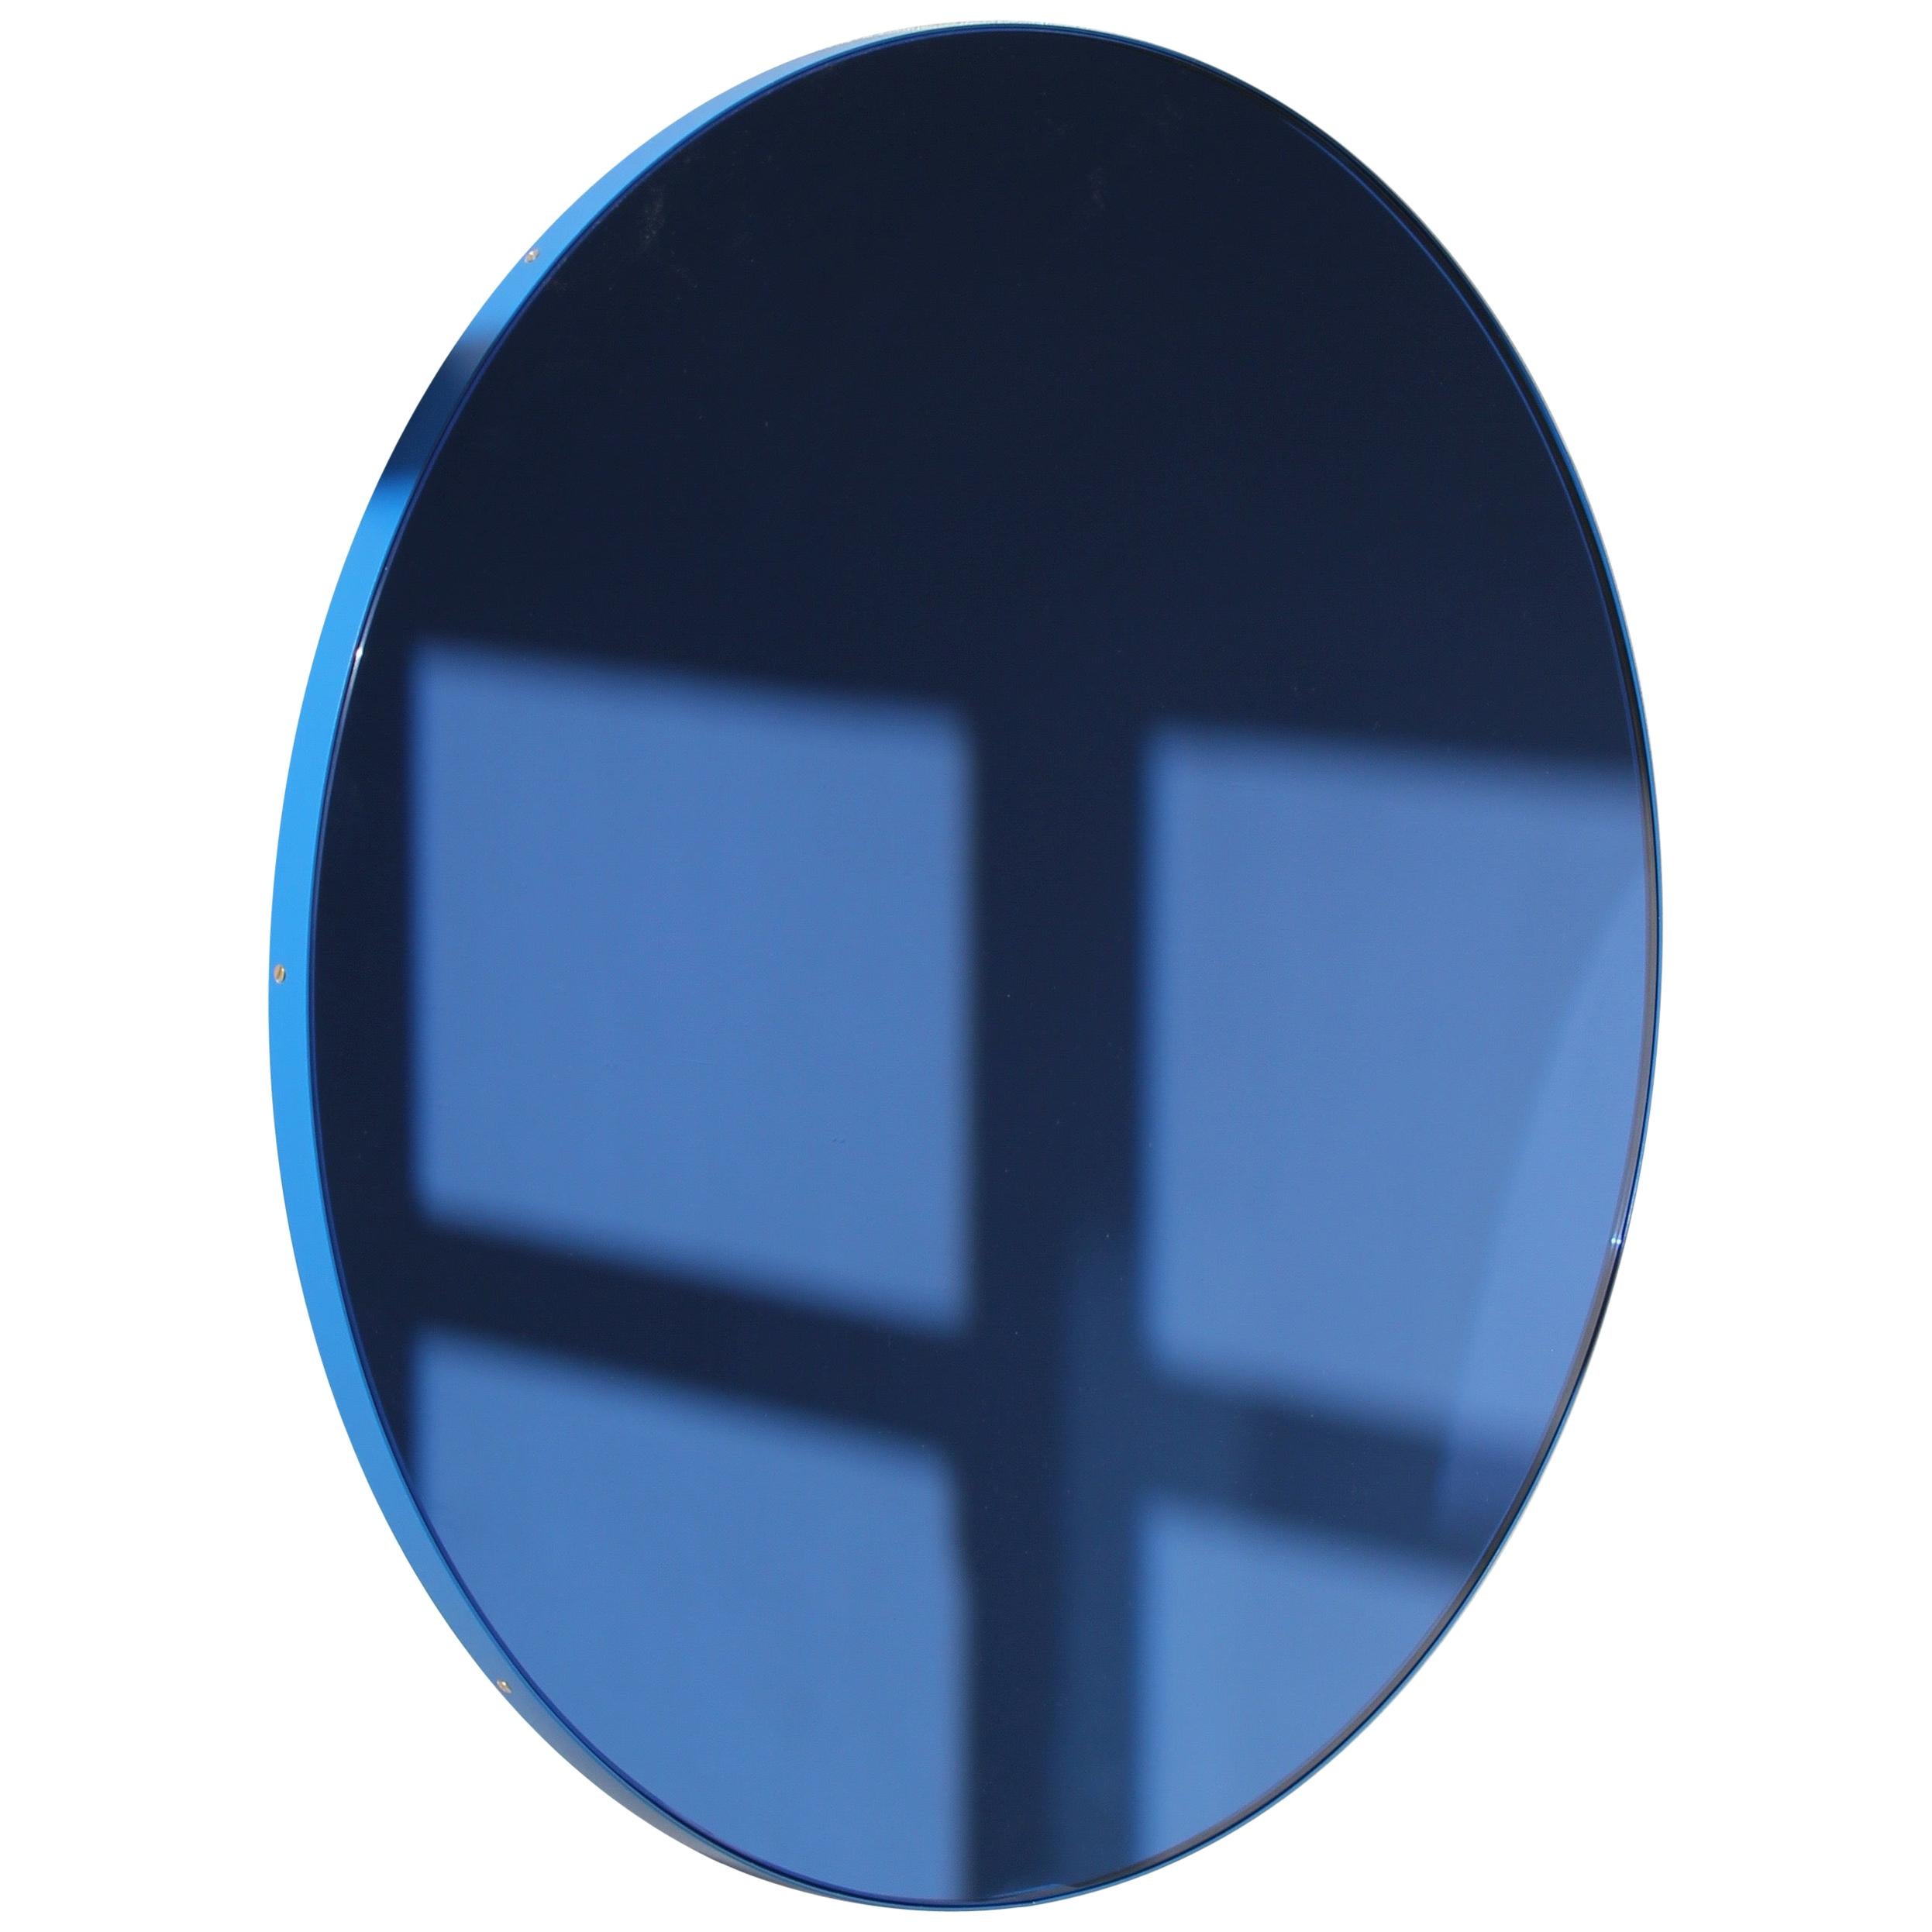 Grand miroir décoratif rond bleu teinté Orbis avec cadre bleu, en vente